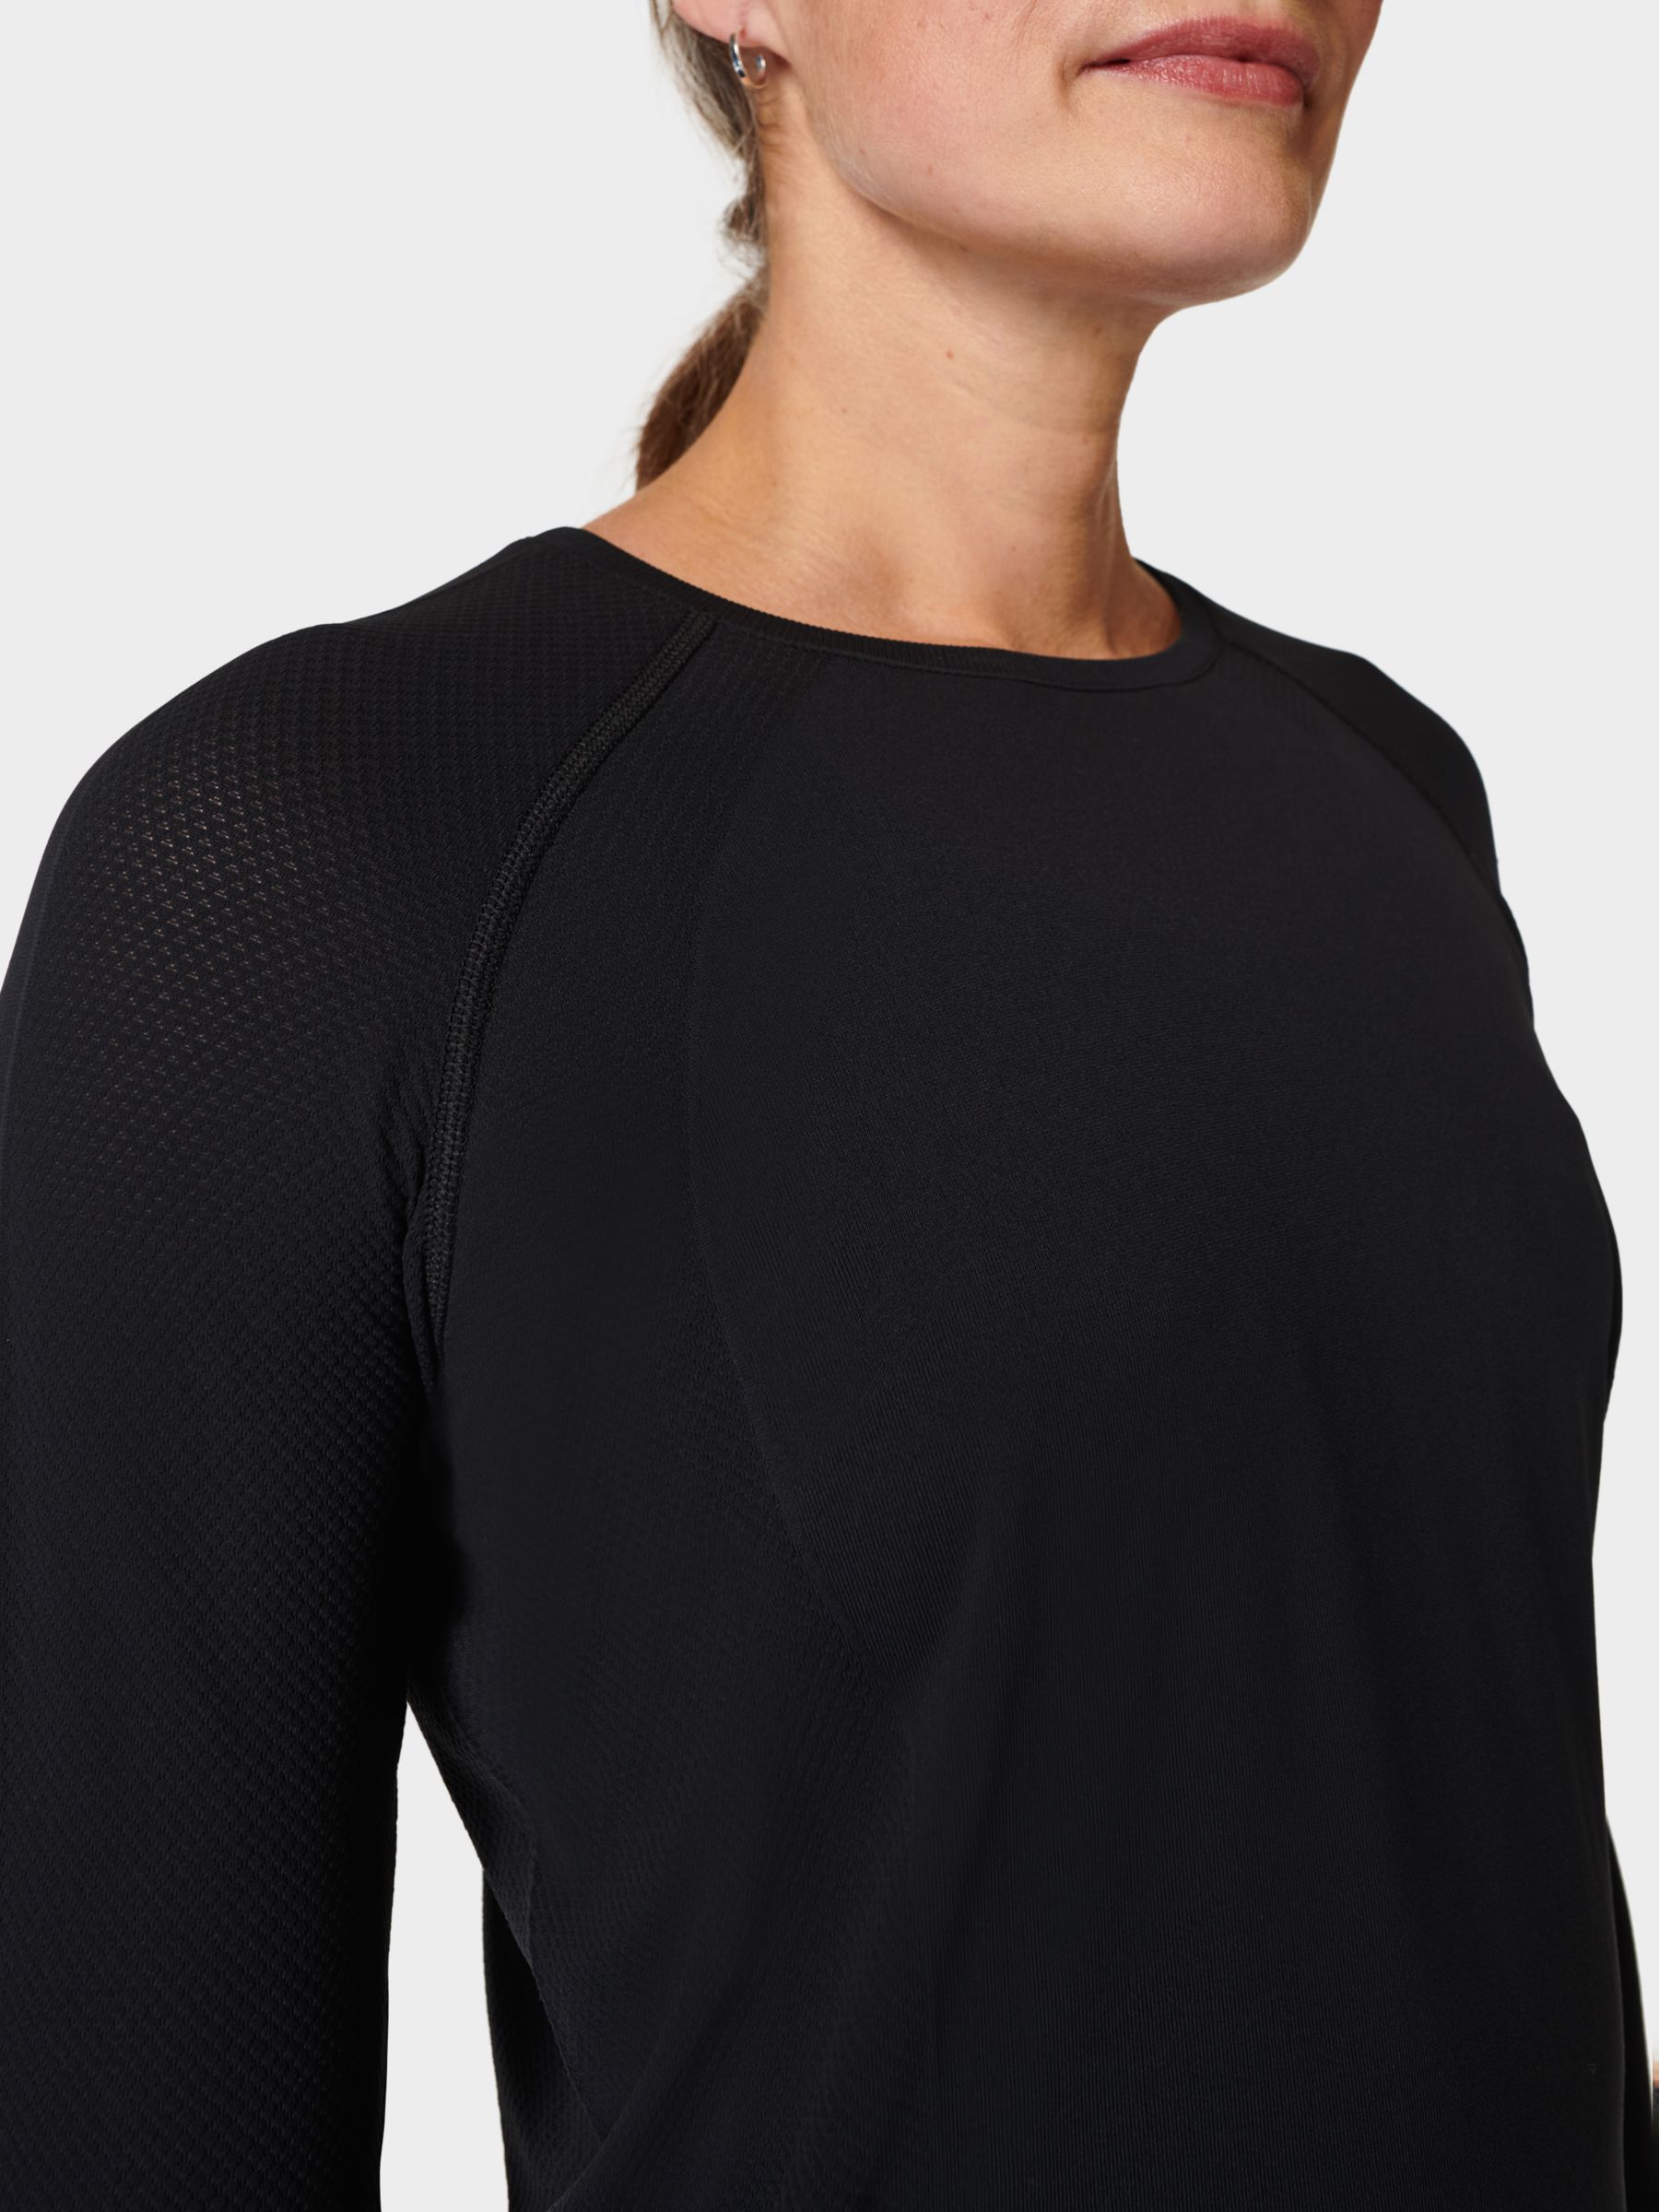 Buy Sweaty Betty Athlete Seamless Long Sleeve Gym Top, Black Online at johnlewis.com